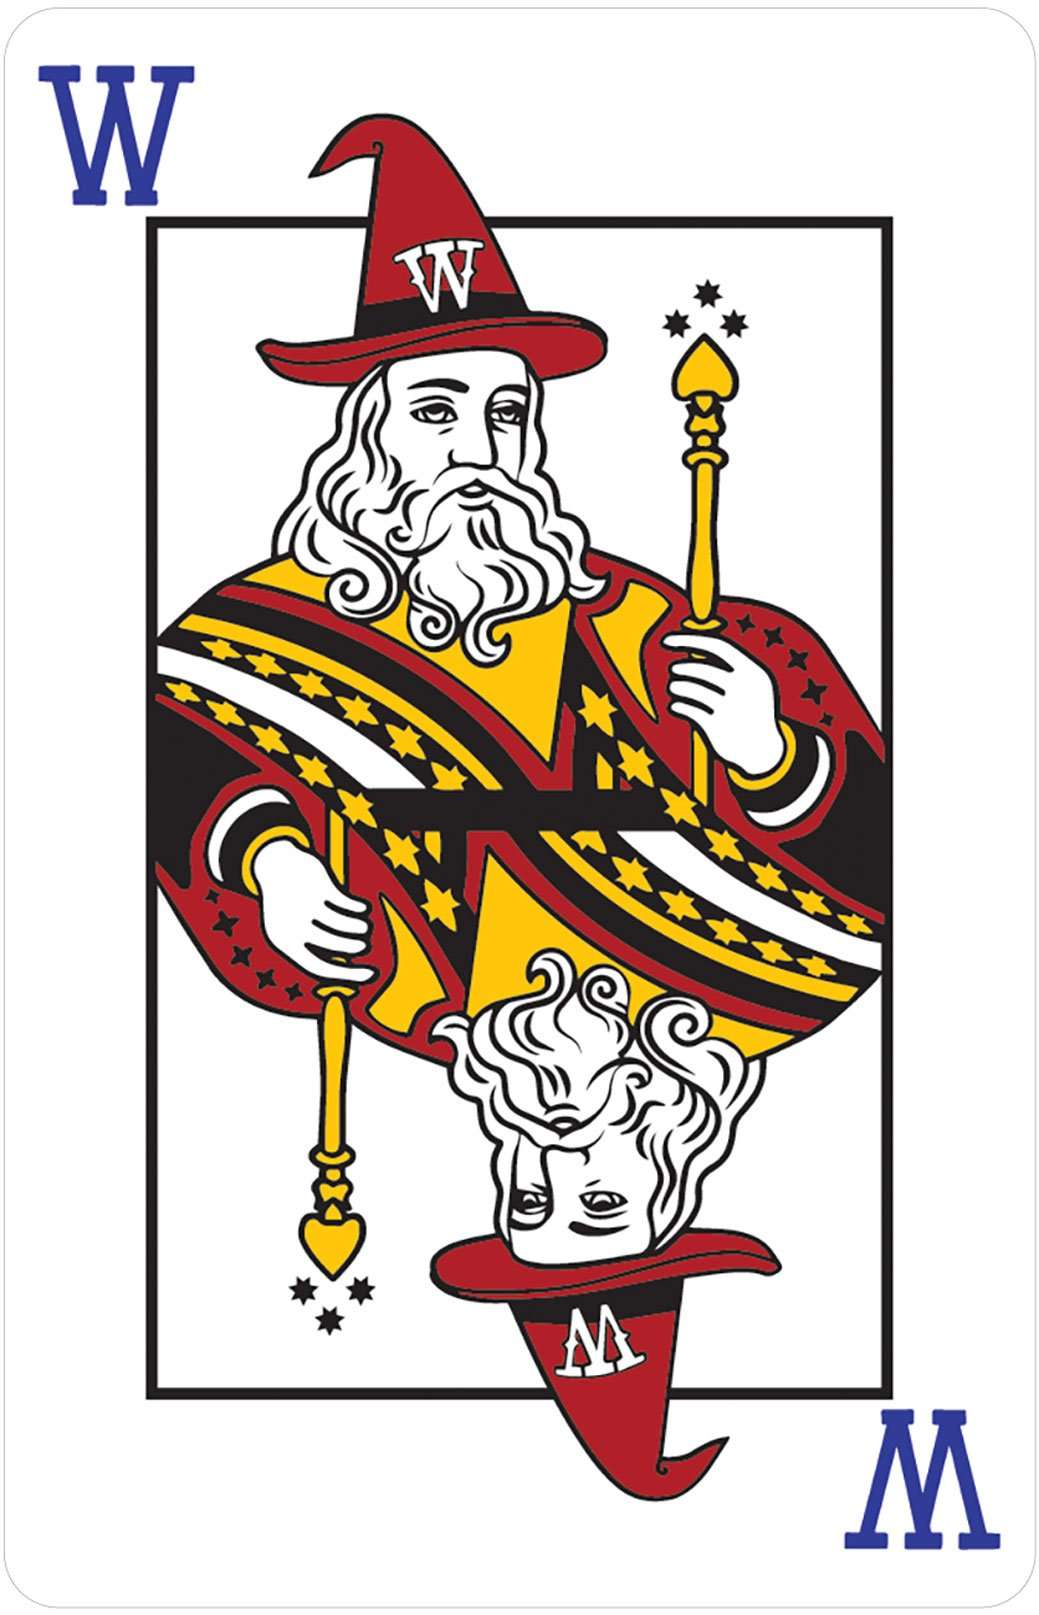 PlayingCardDecks.com-Wizard Camelot Edition Card Game USGS